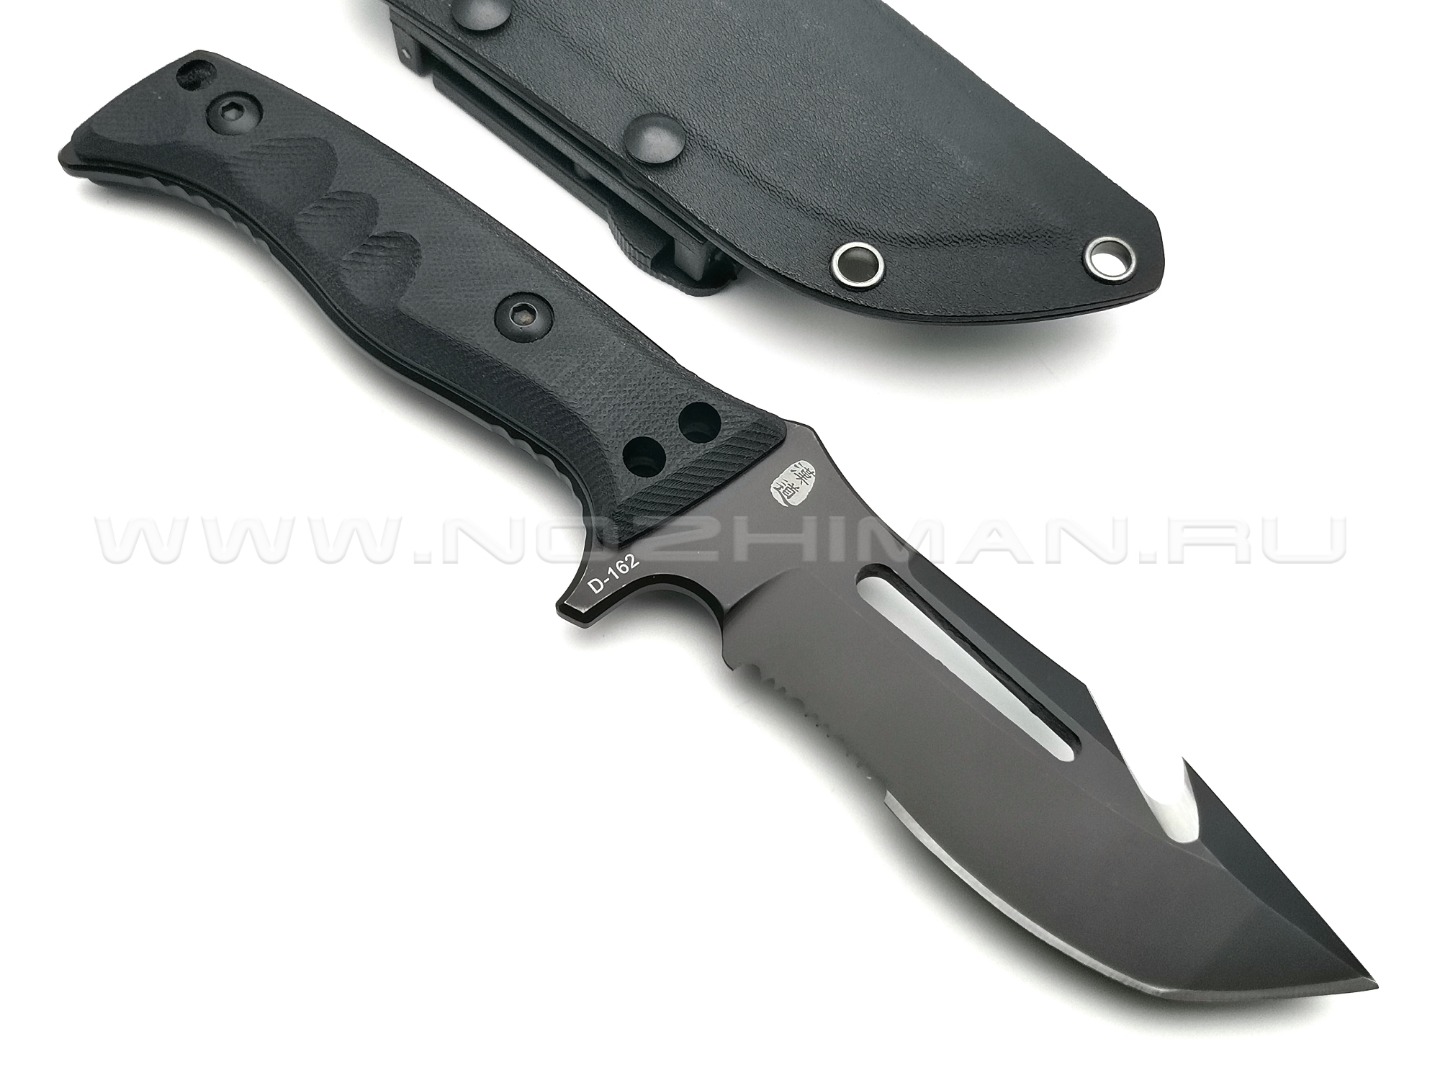 TuoTown нож D-162 сталь D2, рукоять G10 black